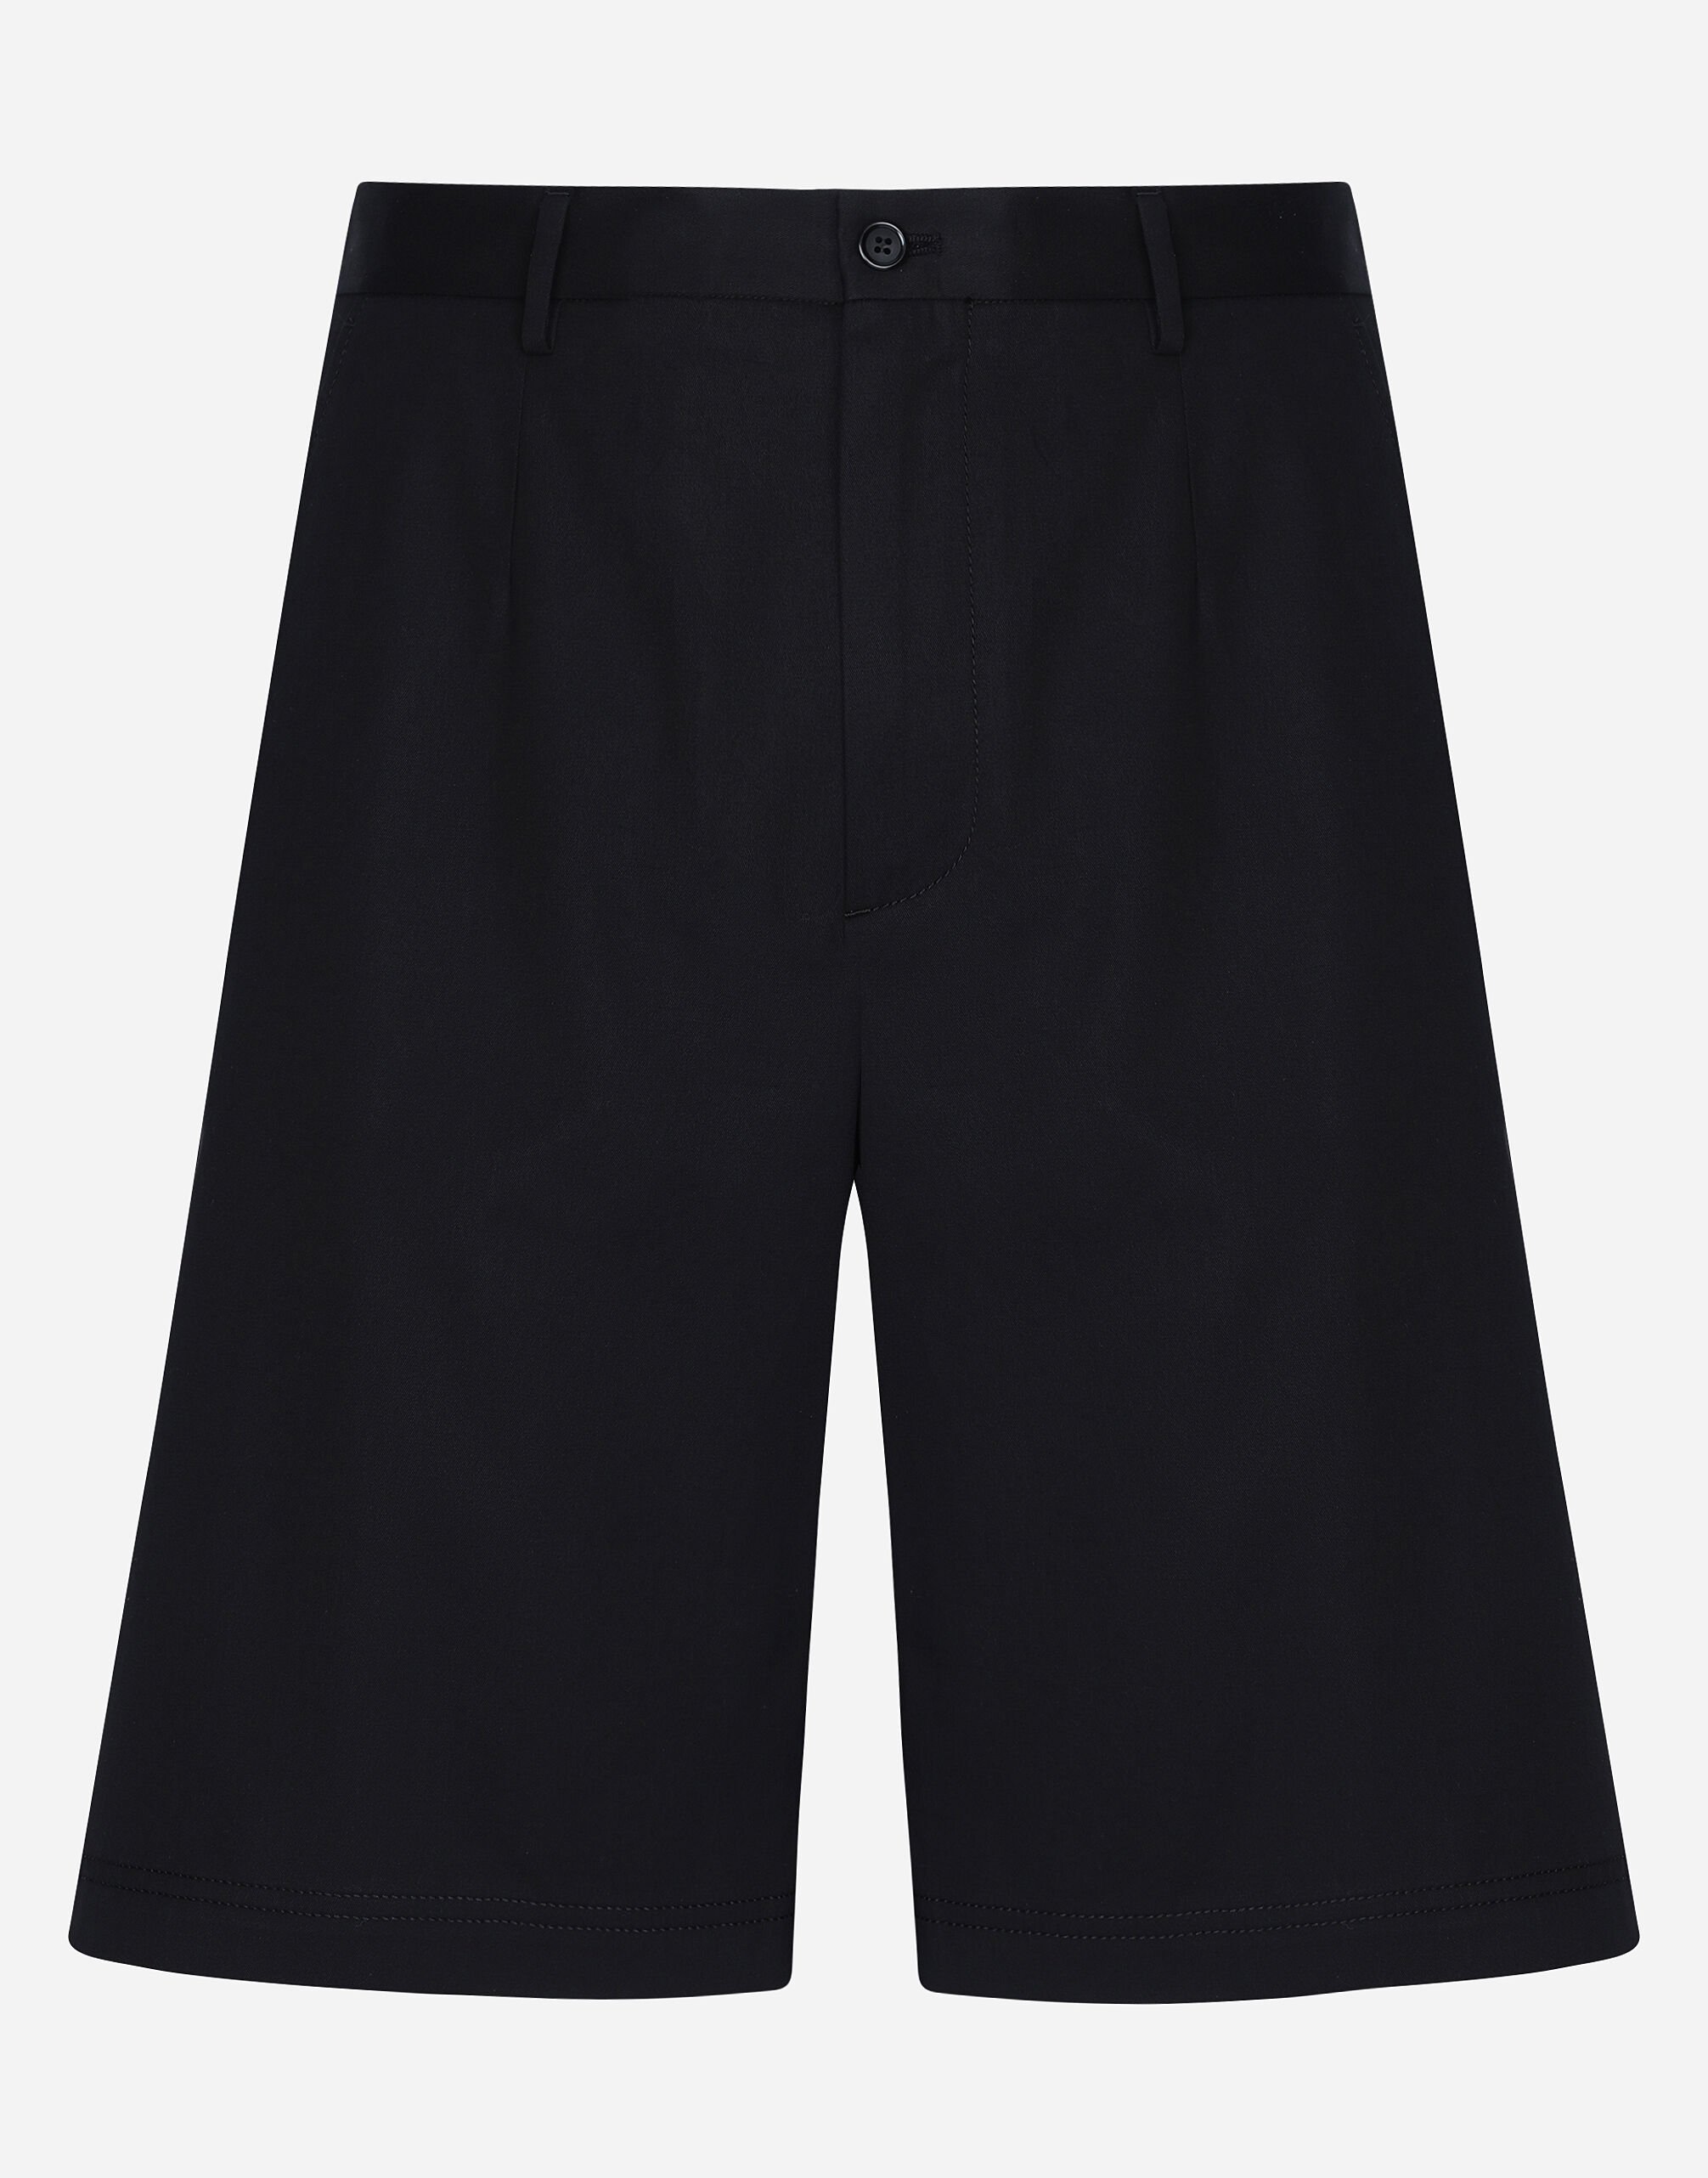 Dolce & Gabbana Stretch cotton shorts with branded tag Black G5JG4TFU5U8